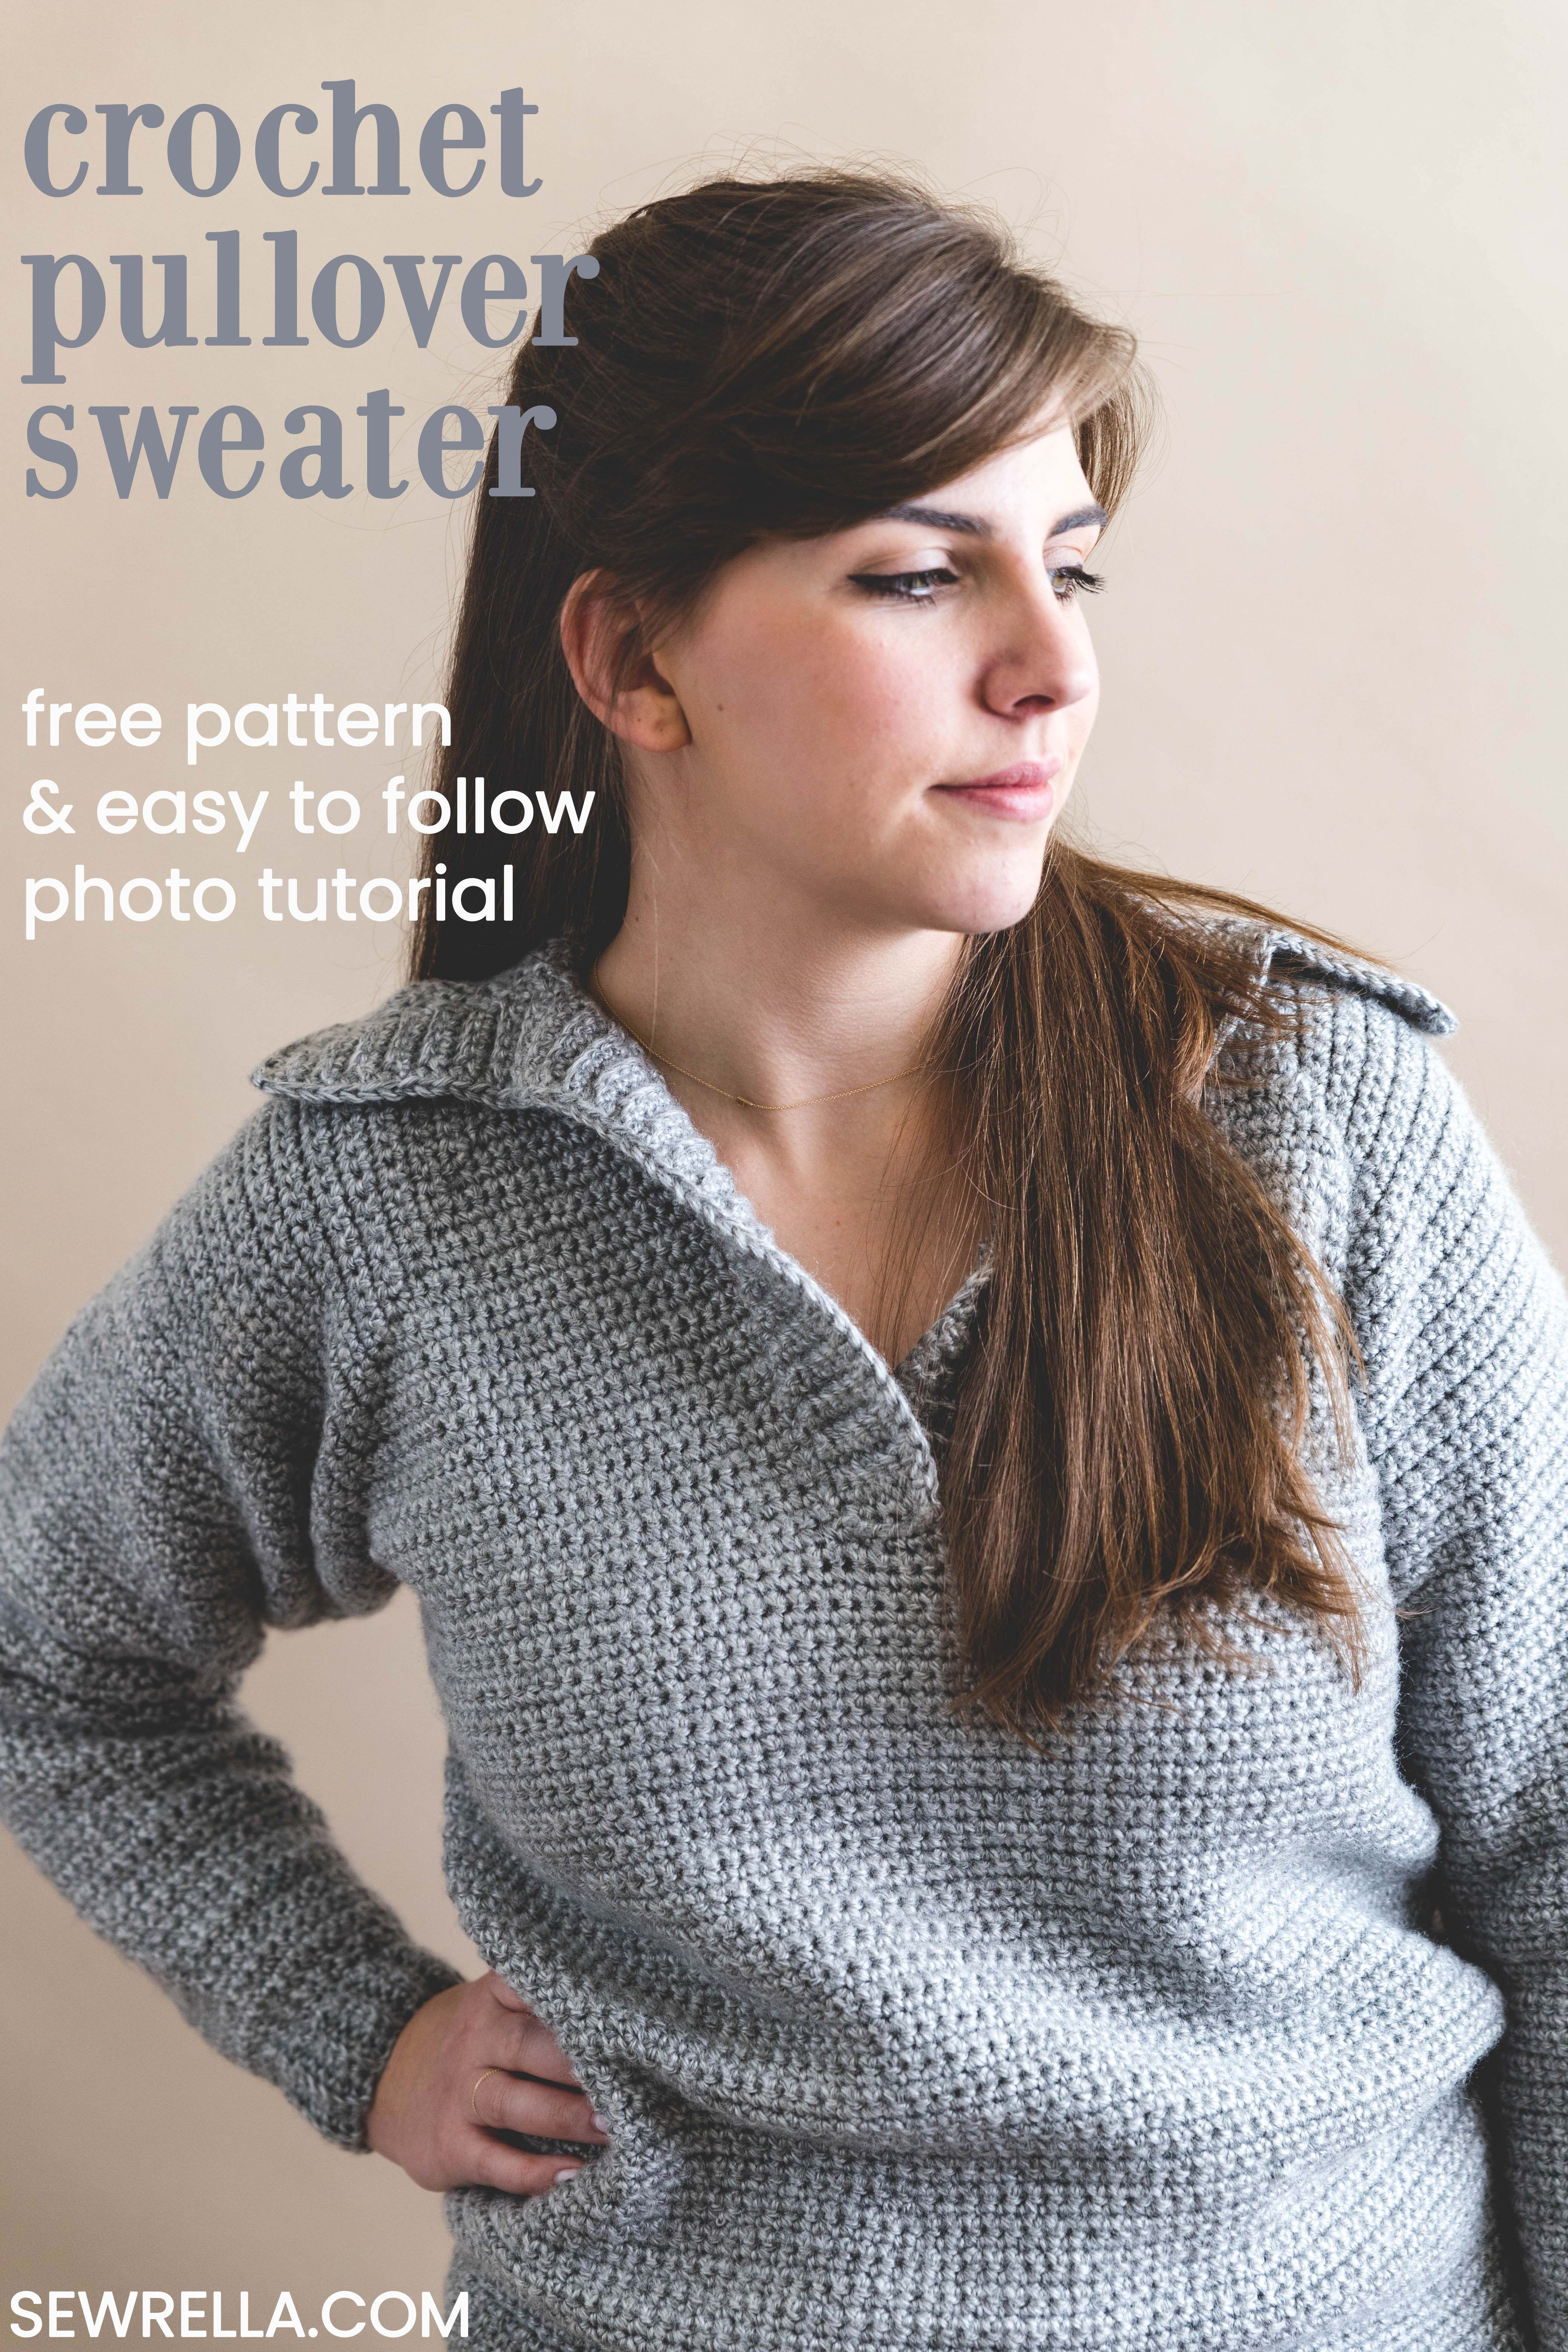 Easy Crochet Pullover Pattern Crochet Rainier Sweater Free Pattern Sewrella Pinterest